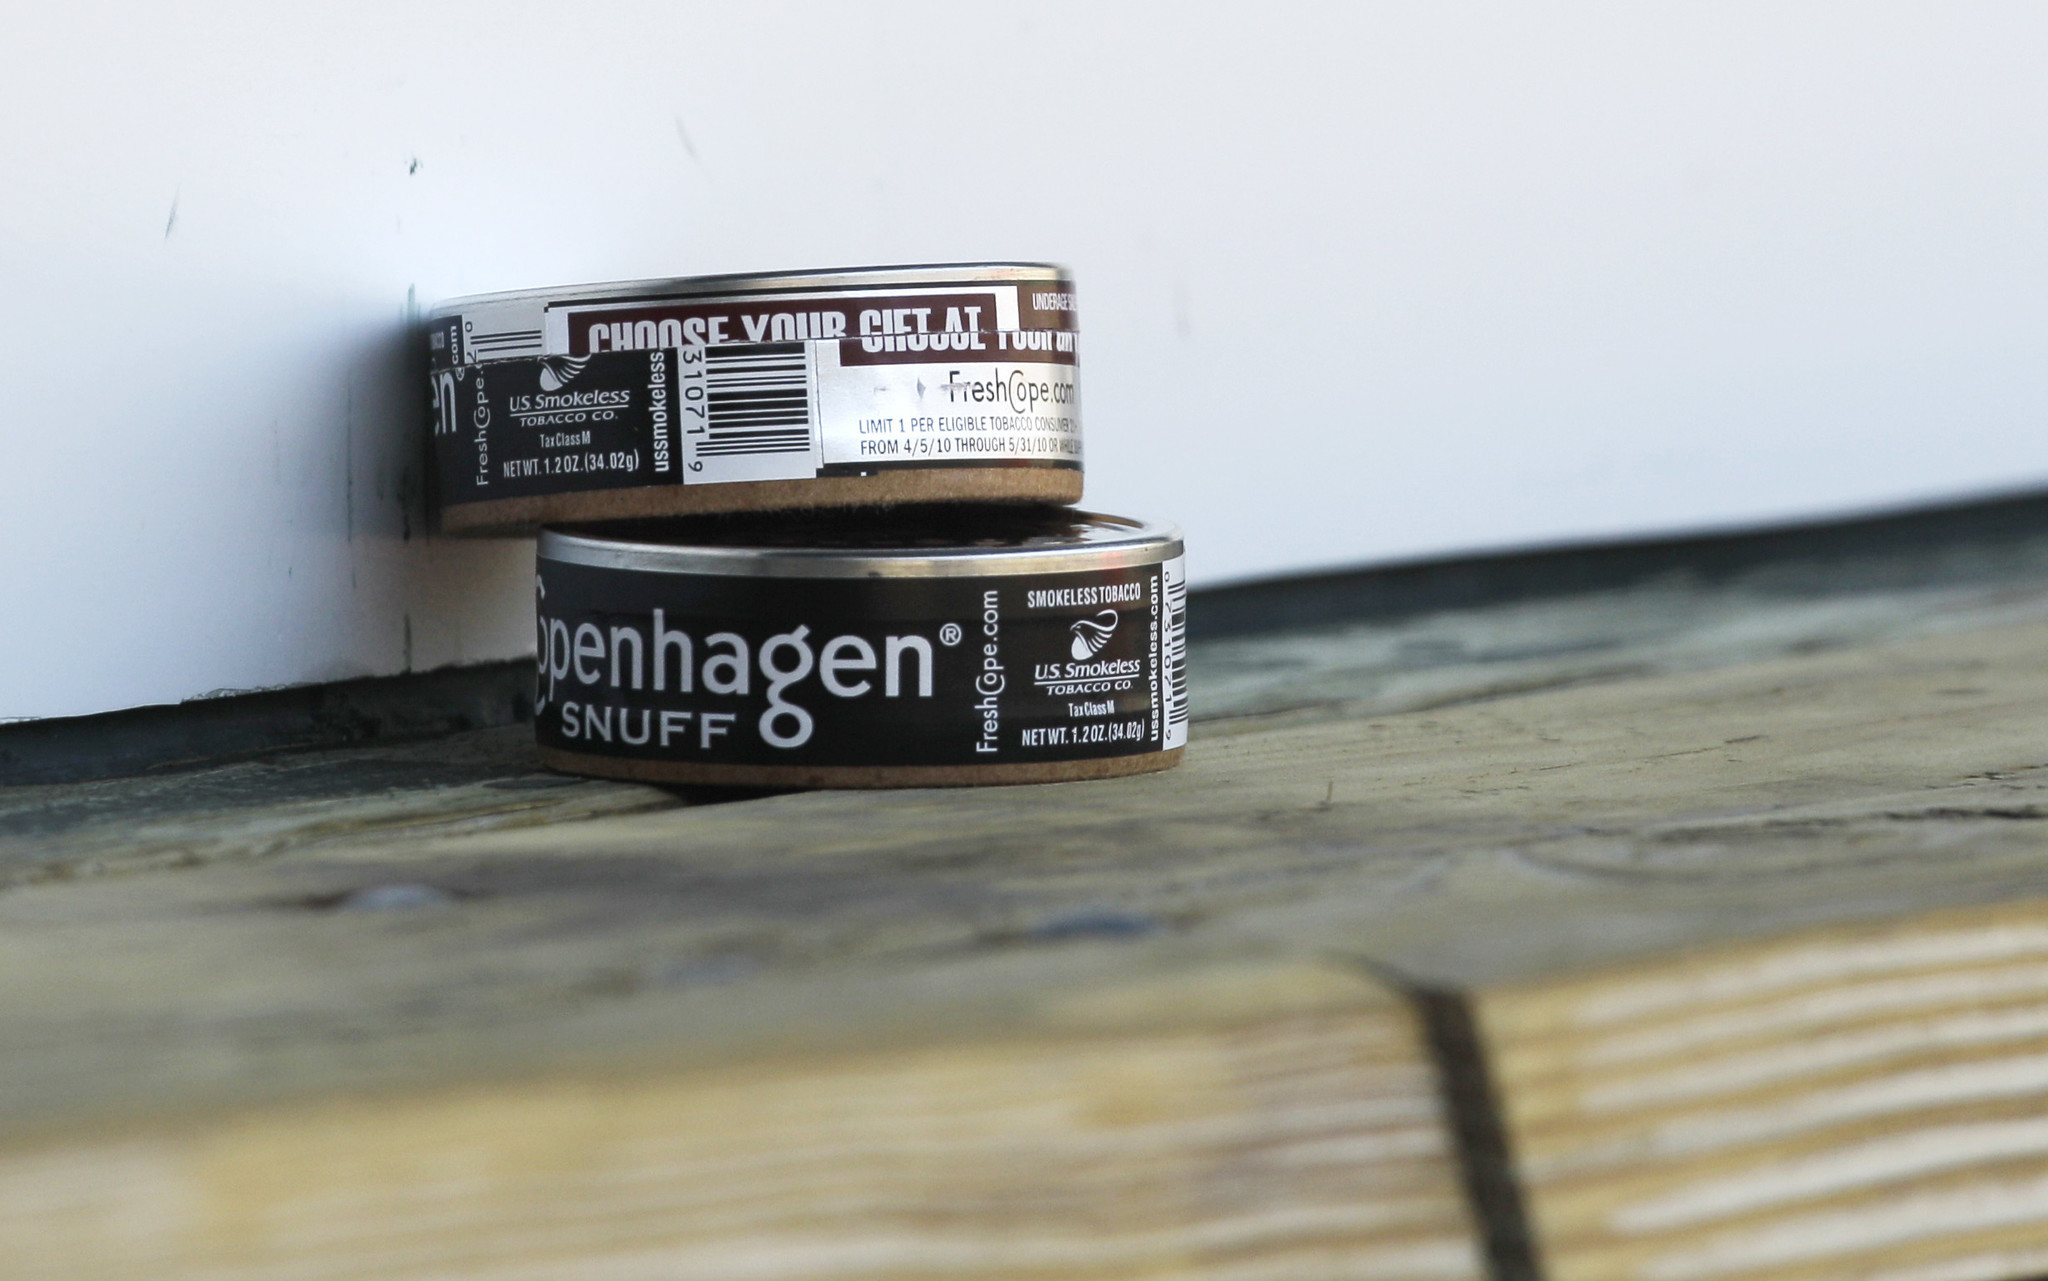 What companies sell Copenhagen Smokeless Tobacco?